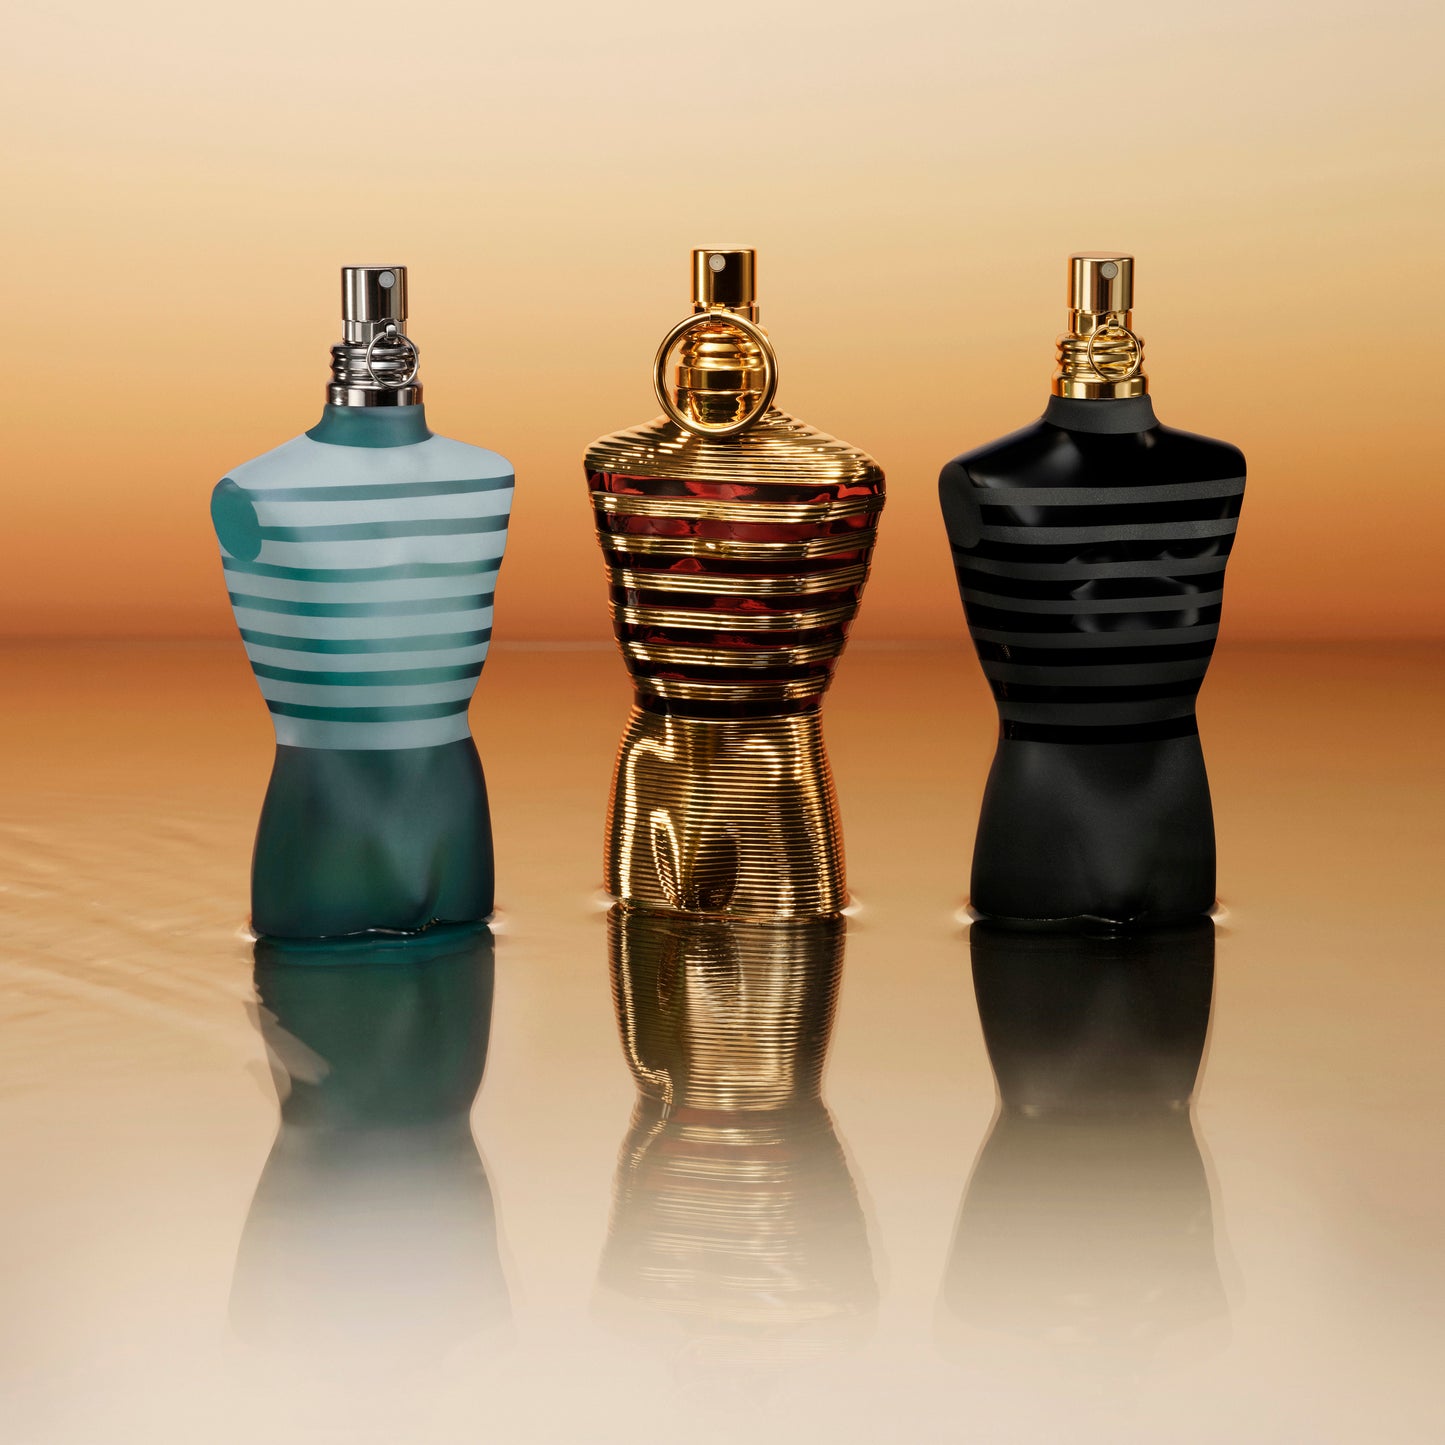 Jean Paul Gaultier Le Male Elixir Parfum 125 Ml